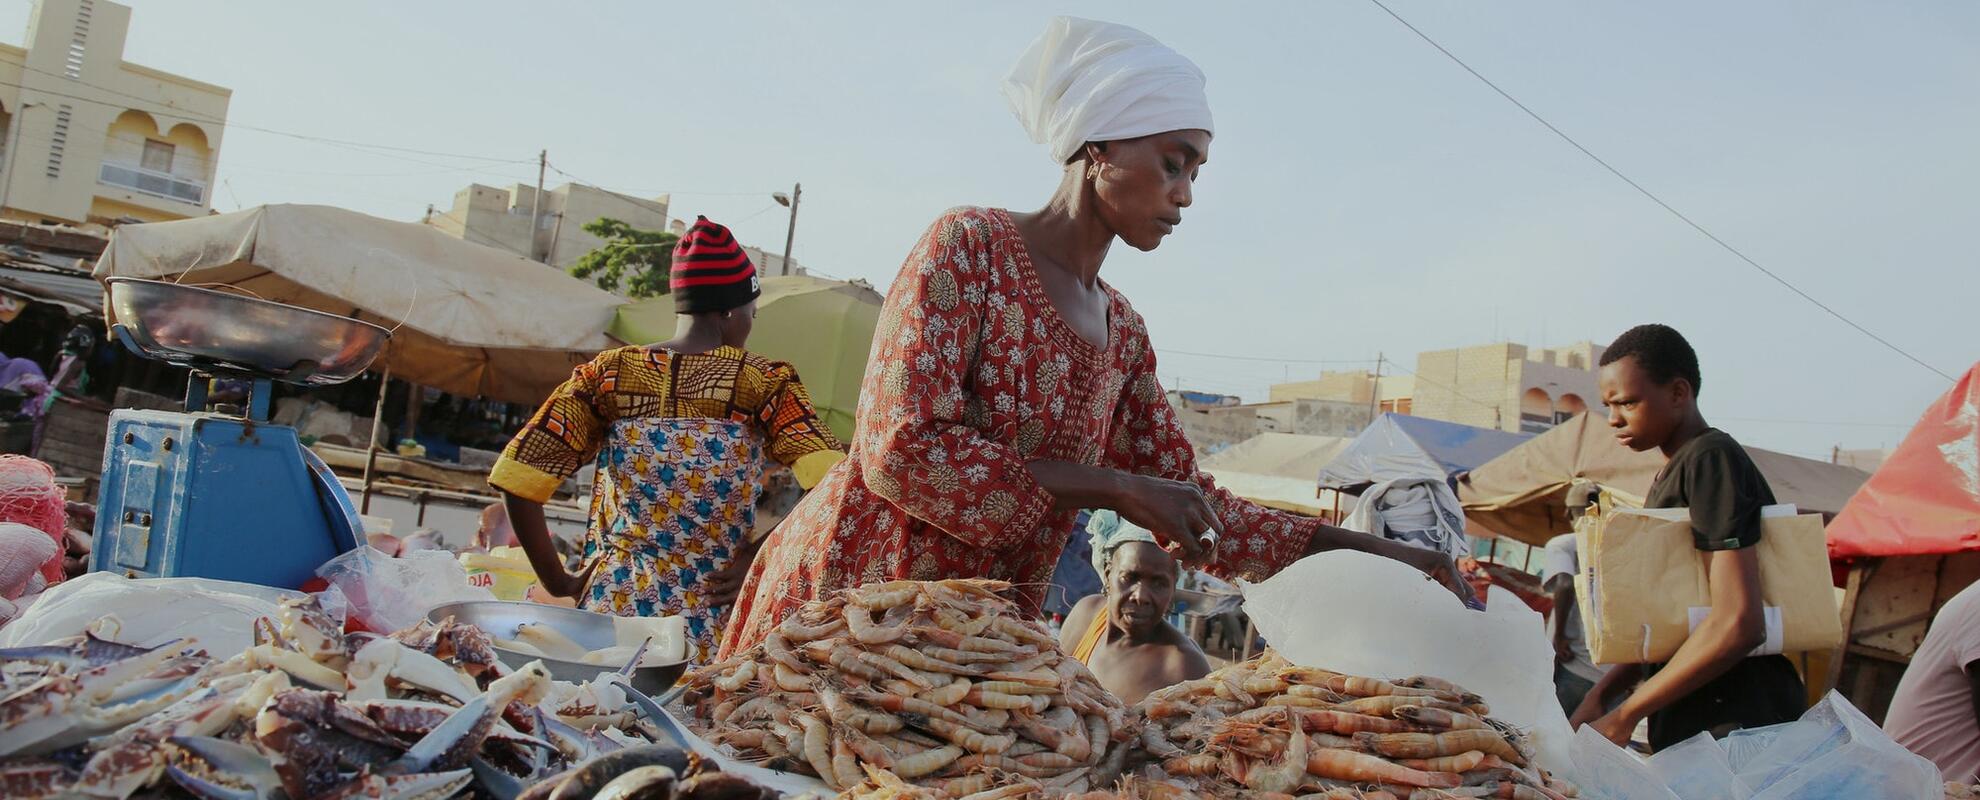 Woman selling fish